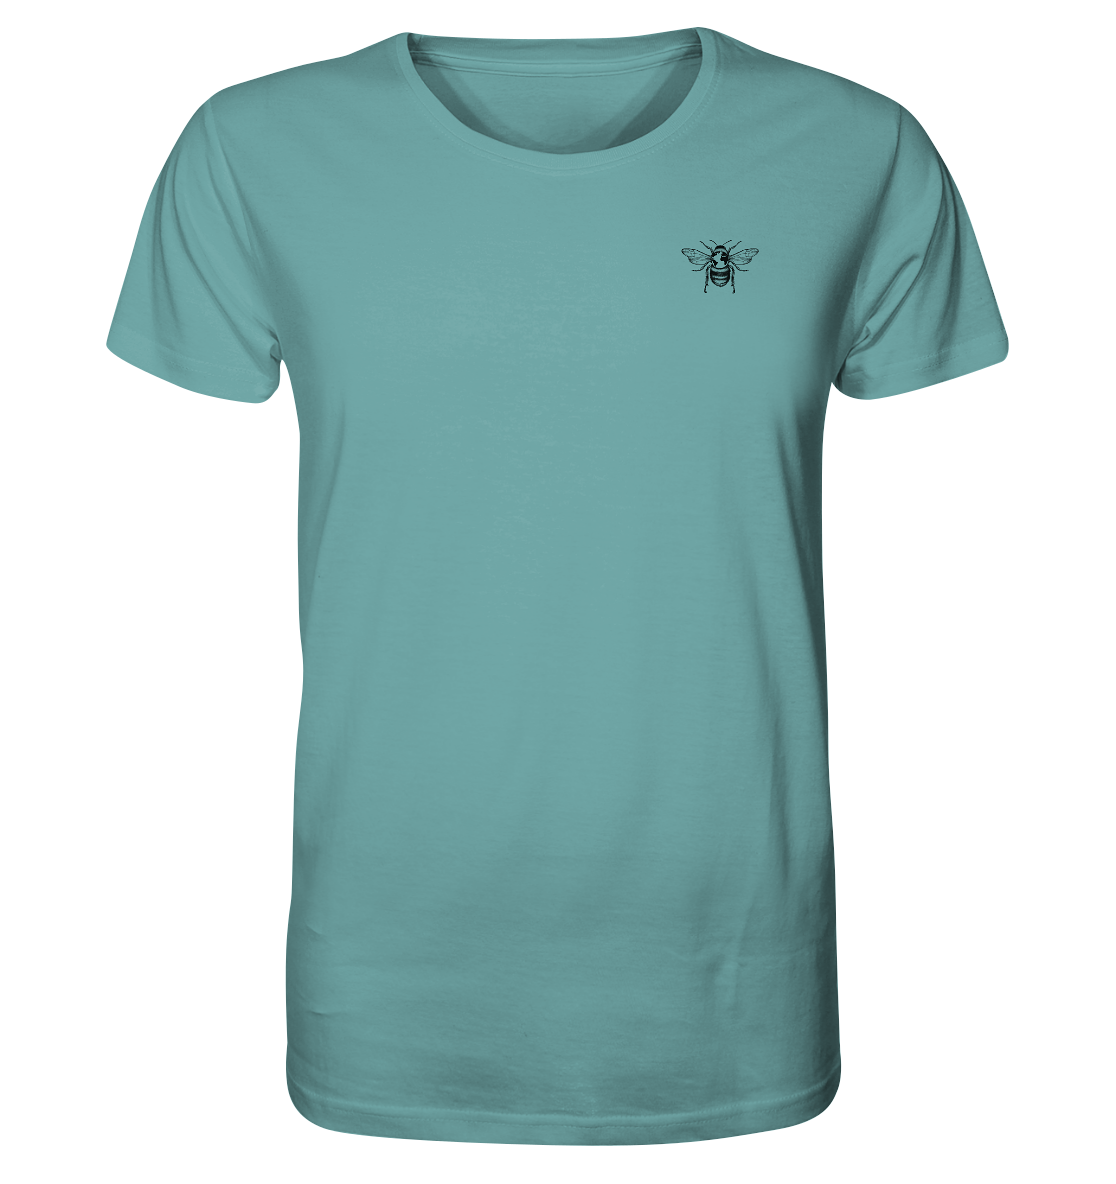 front-organic-shirt-70a7a7-1116x.png